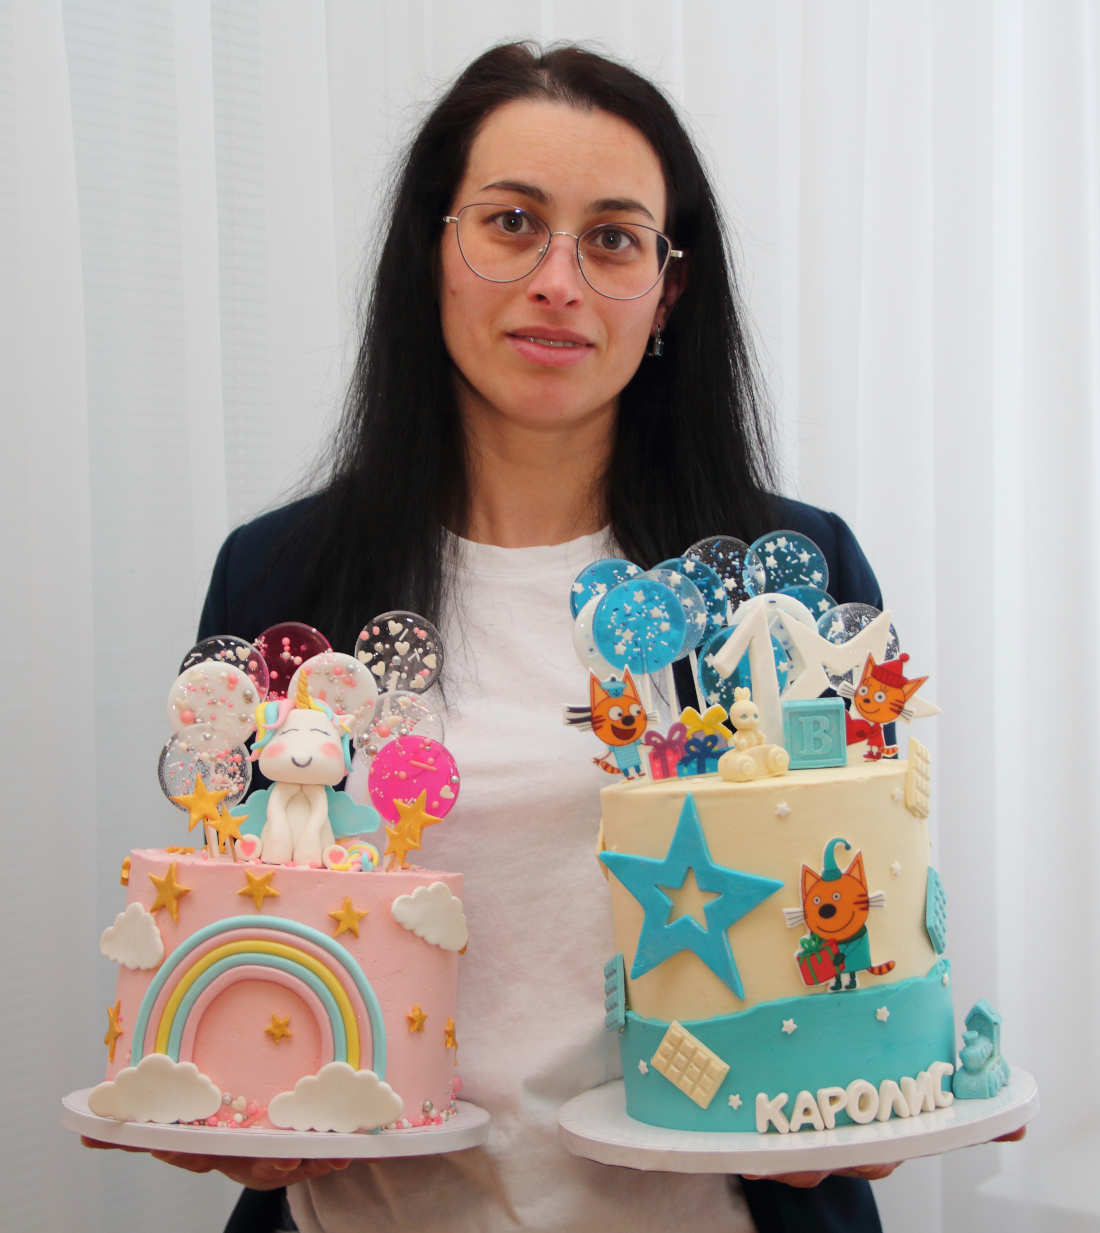 Children's birthday cakes: lollipops, a unicorn and Kid-E-Cats